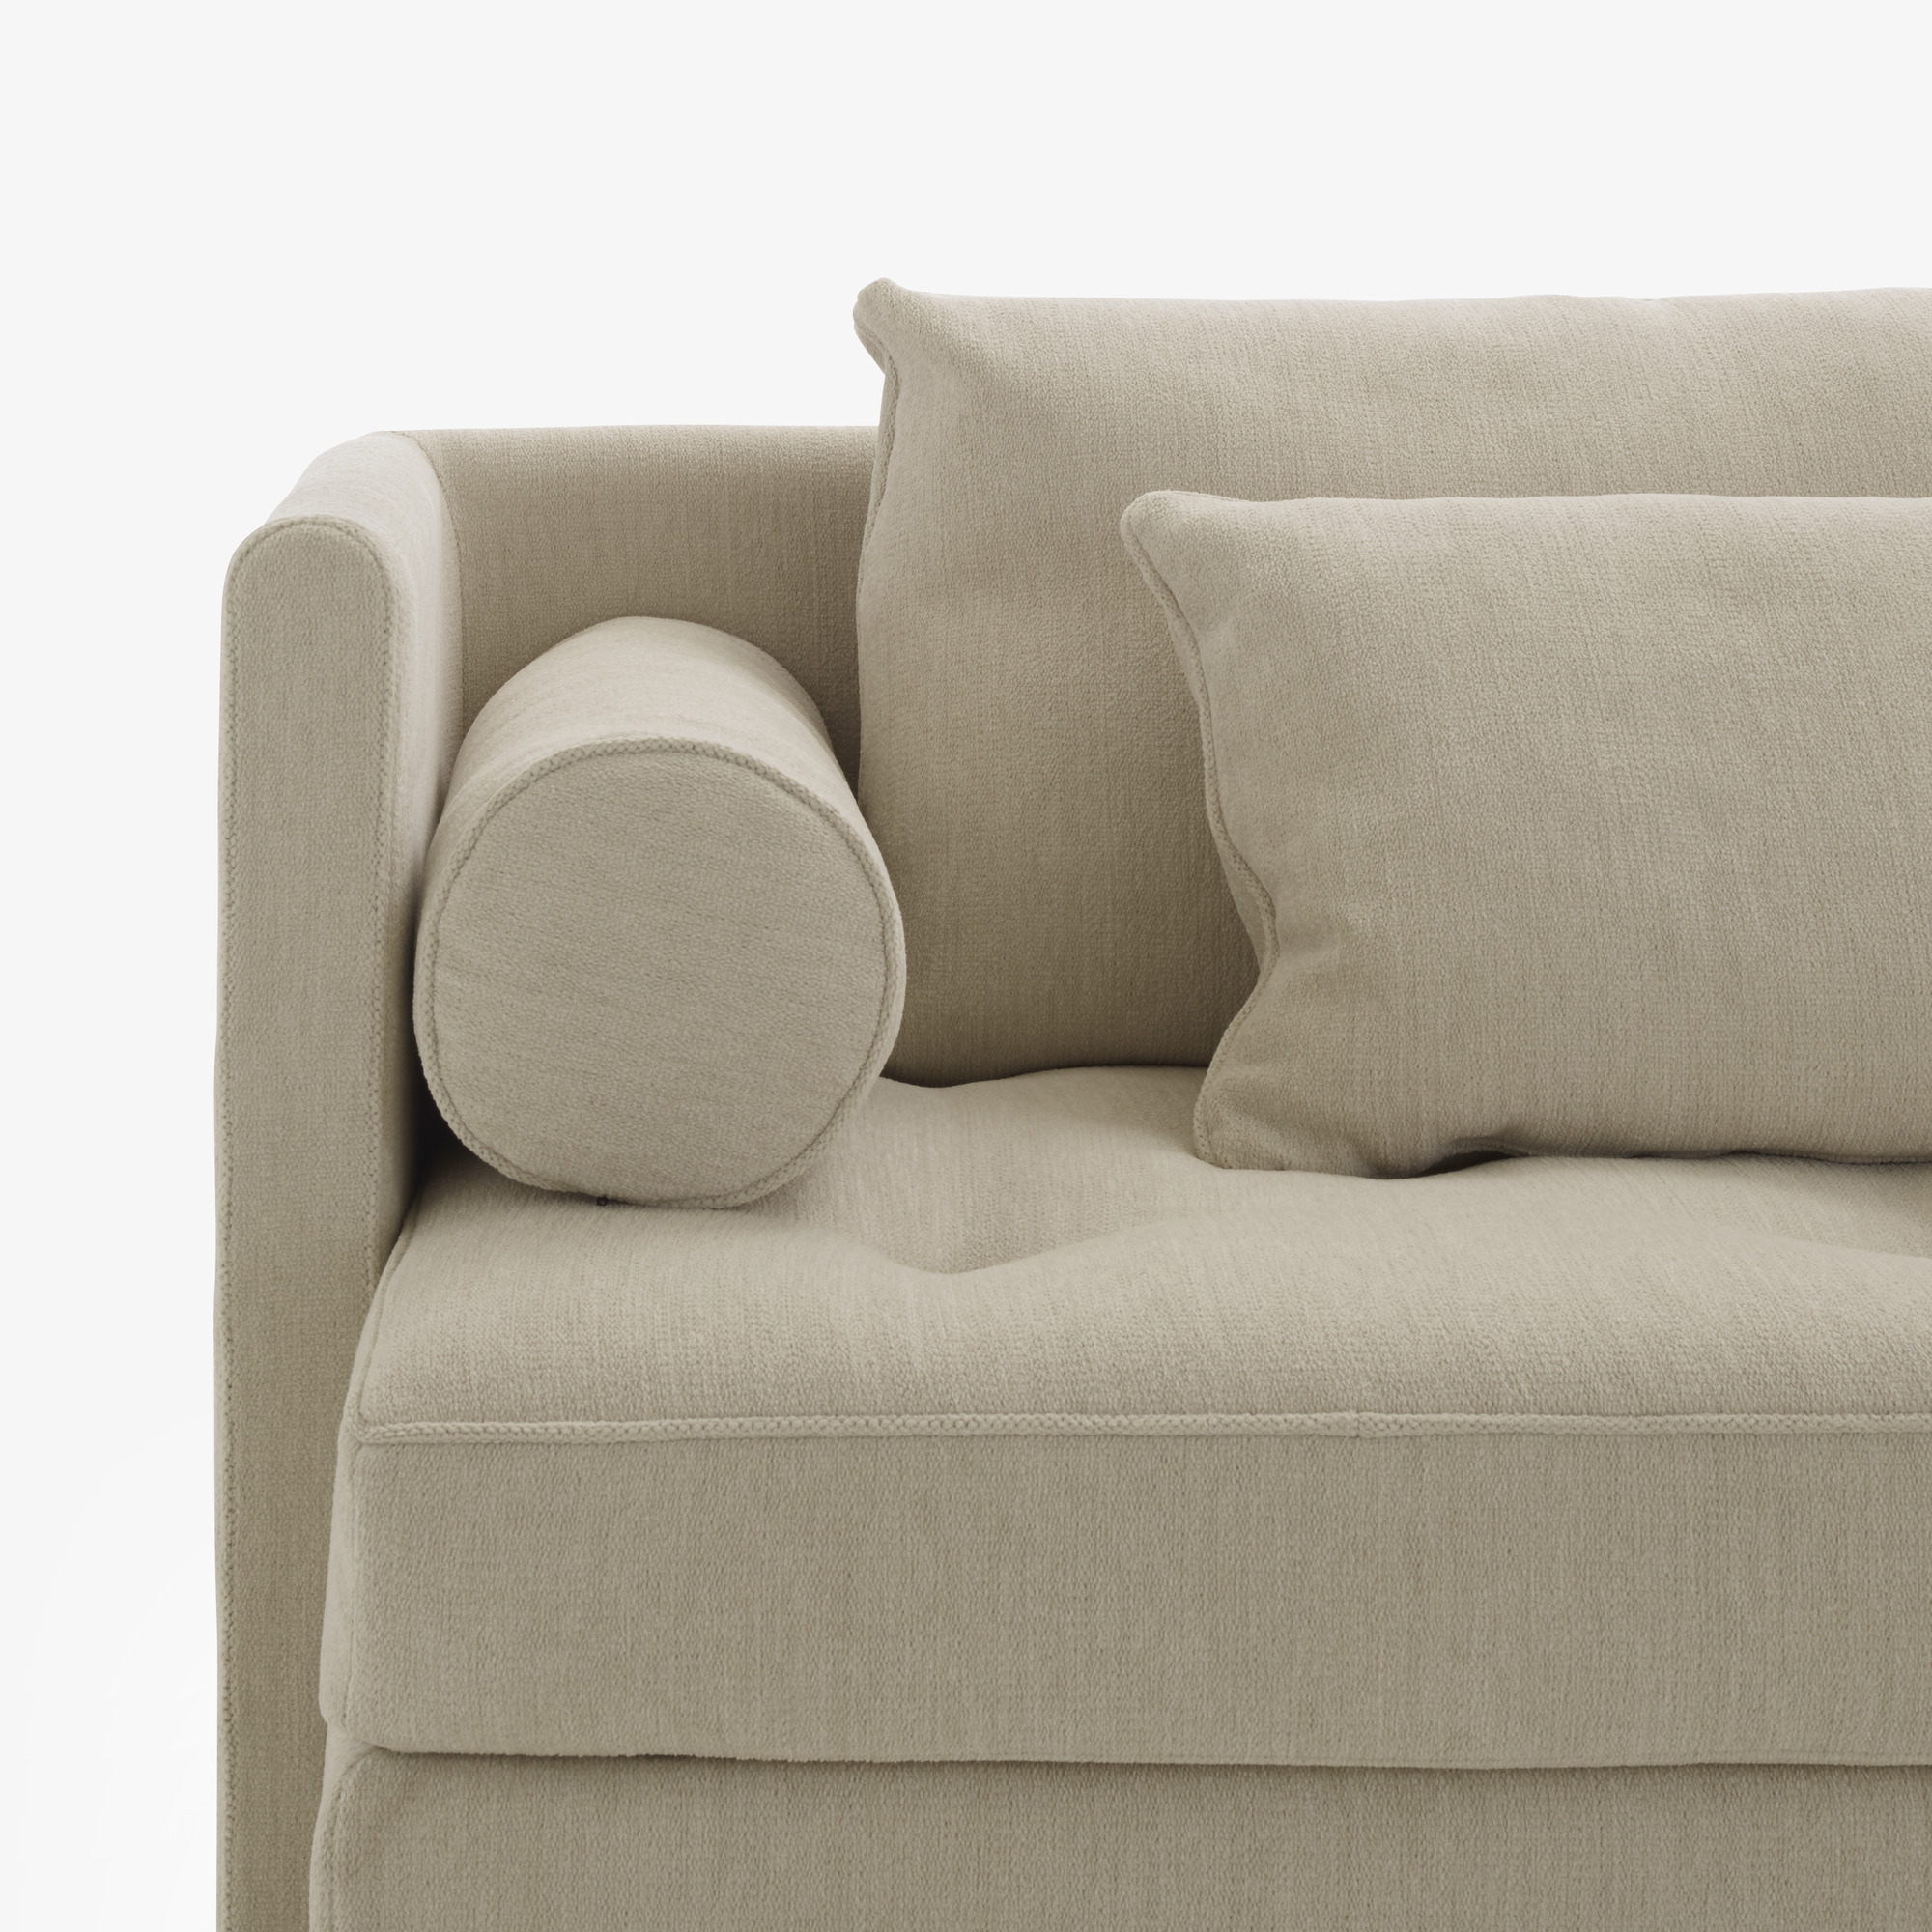 Image 1-arm sofa 4